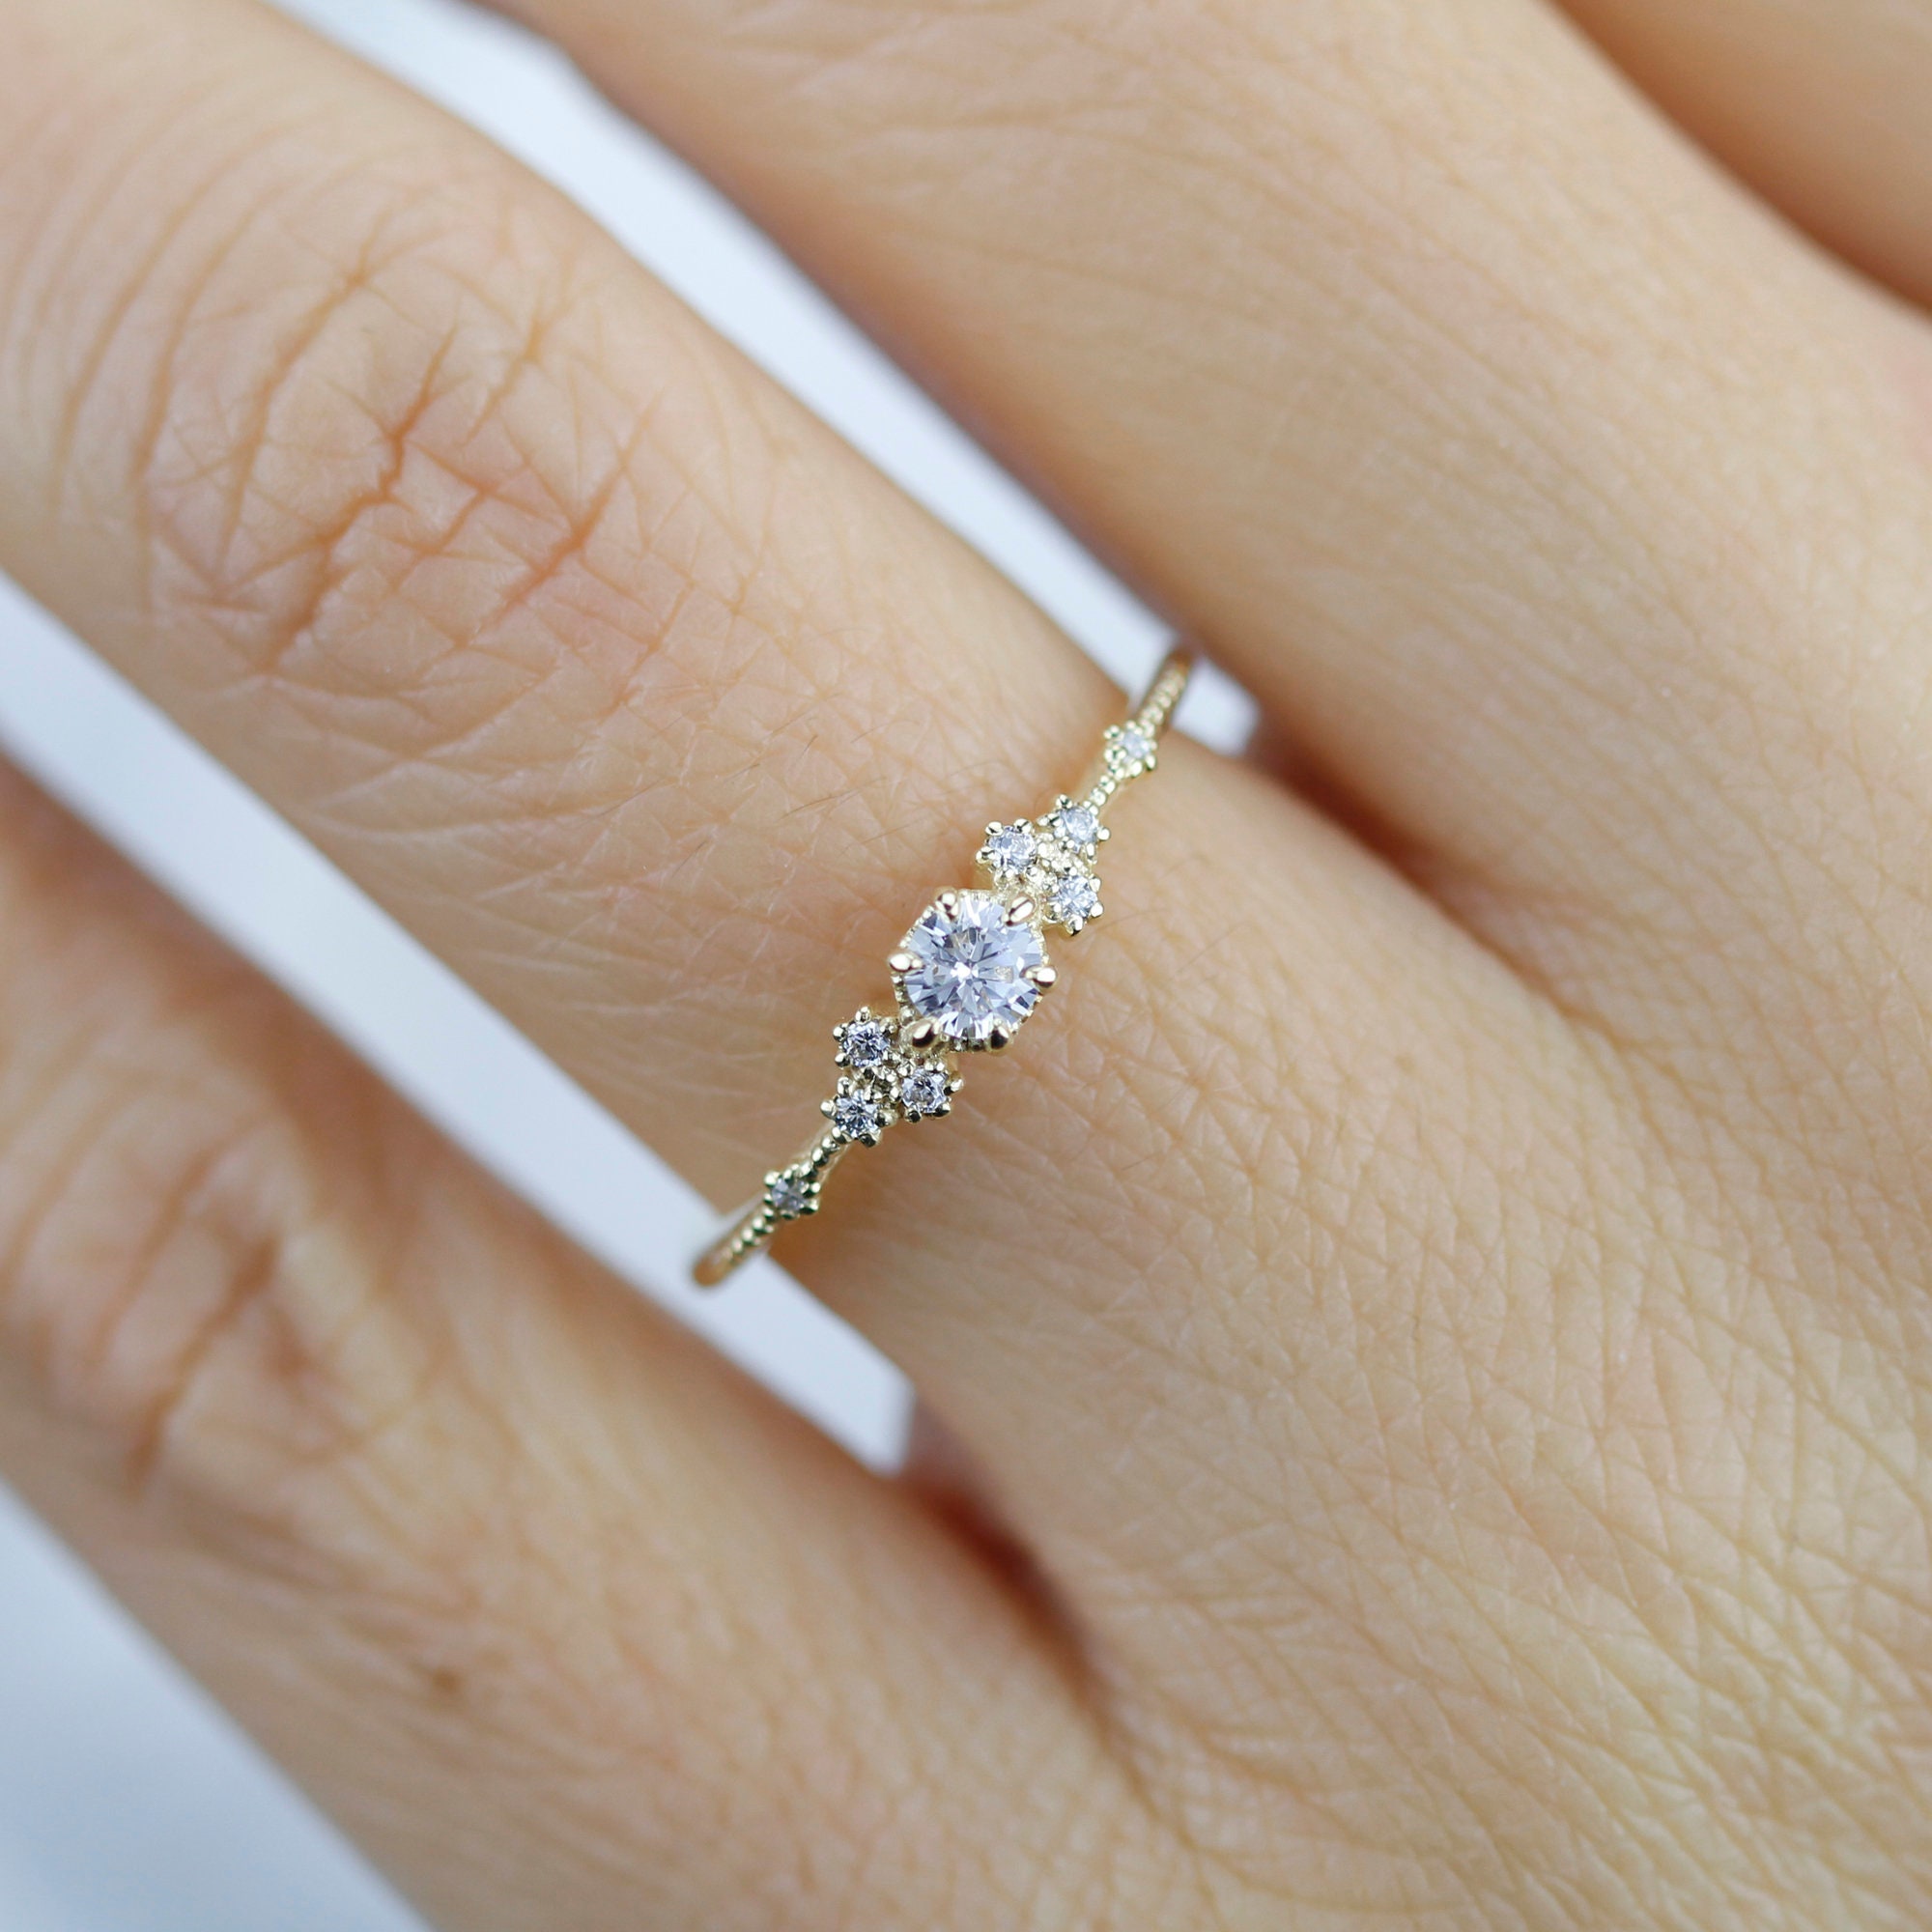 Buy The Fern Coast Diamond Ring Online